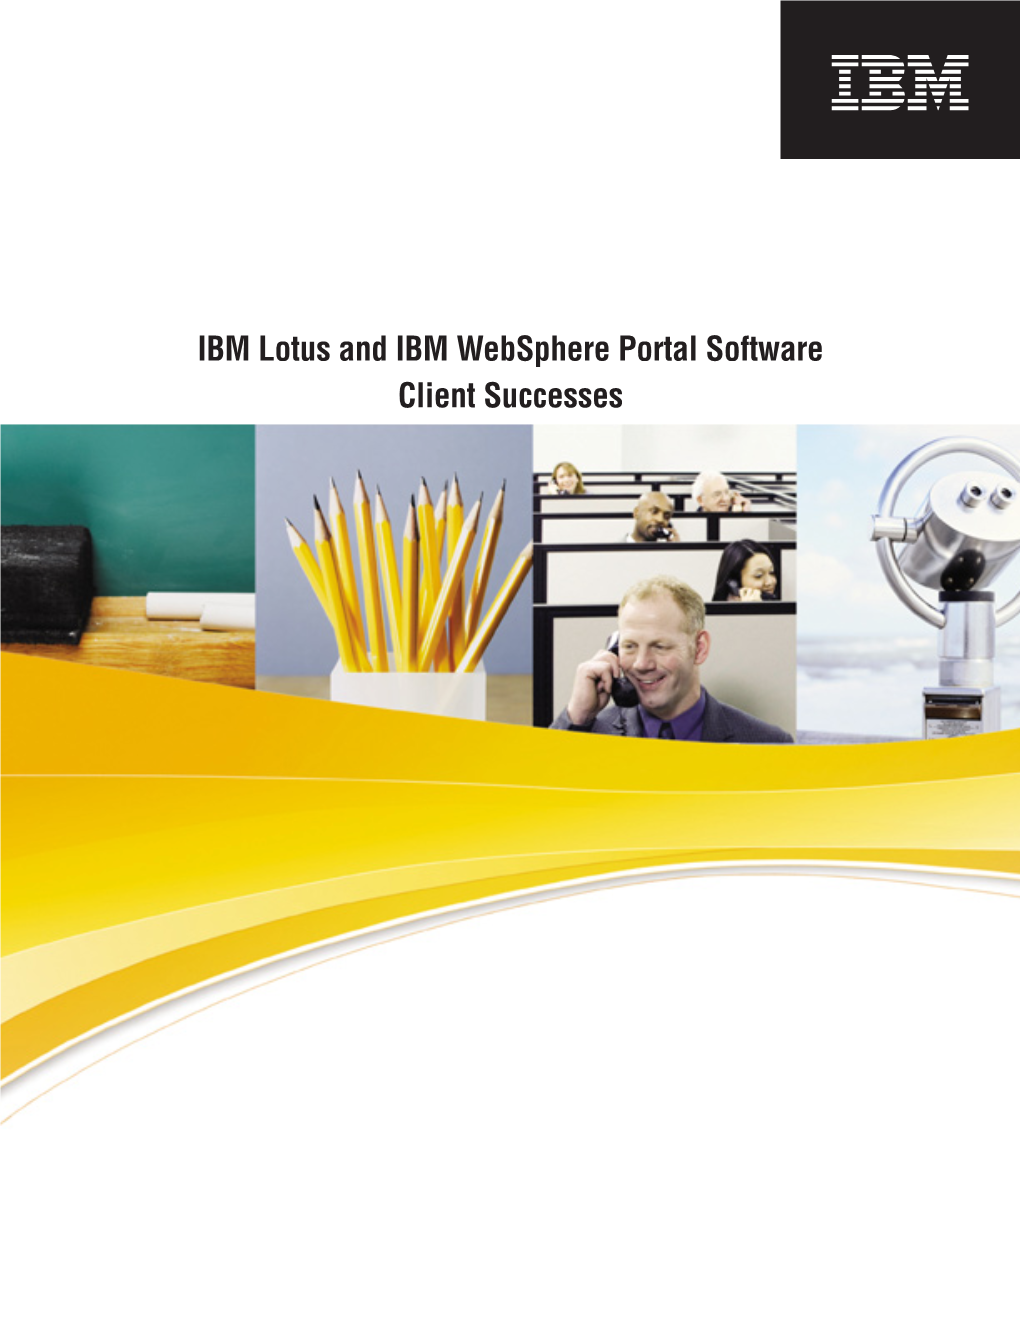 IBM Lotus and IBM Websphere Portal Software Client Successes IBM Lotus and IBM Websphere Portal Software Client Successes